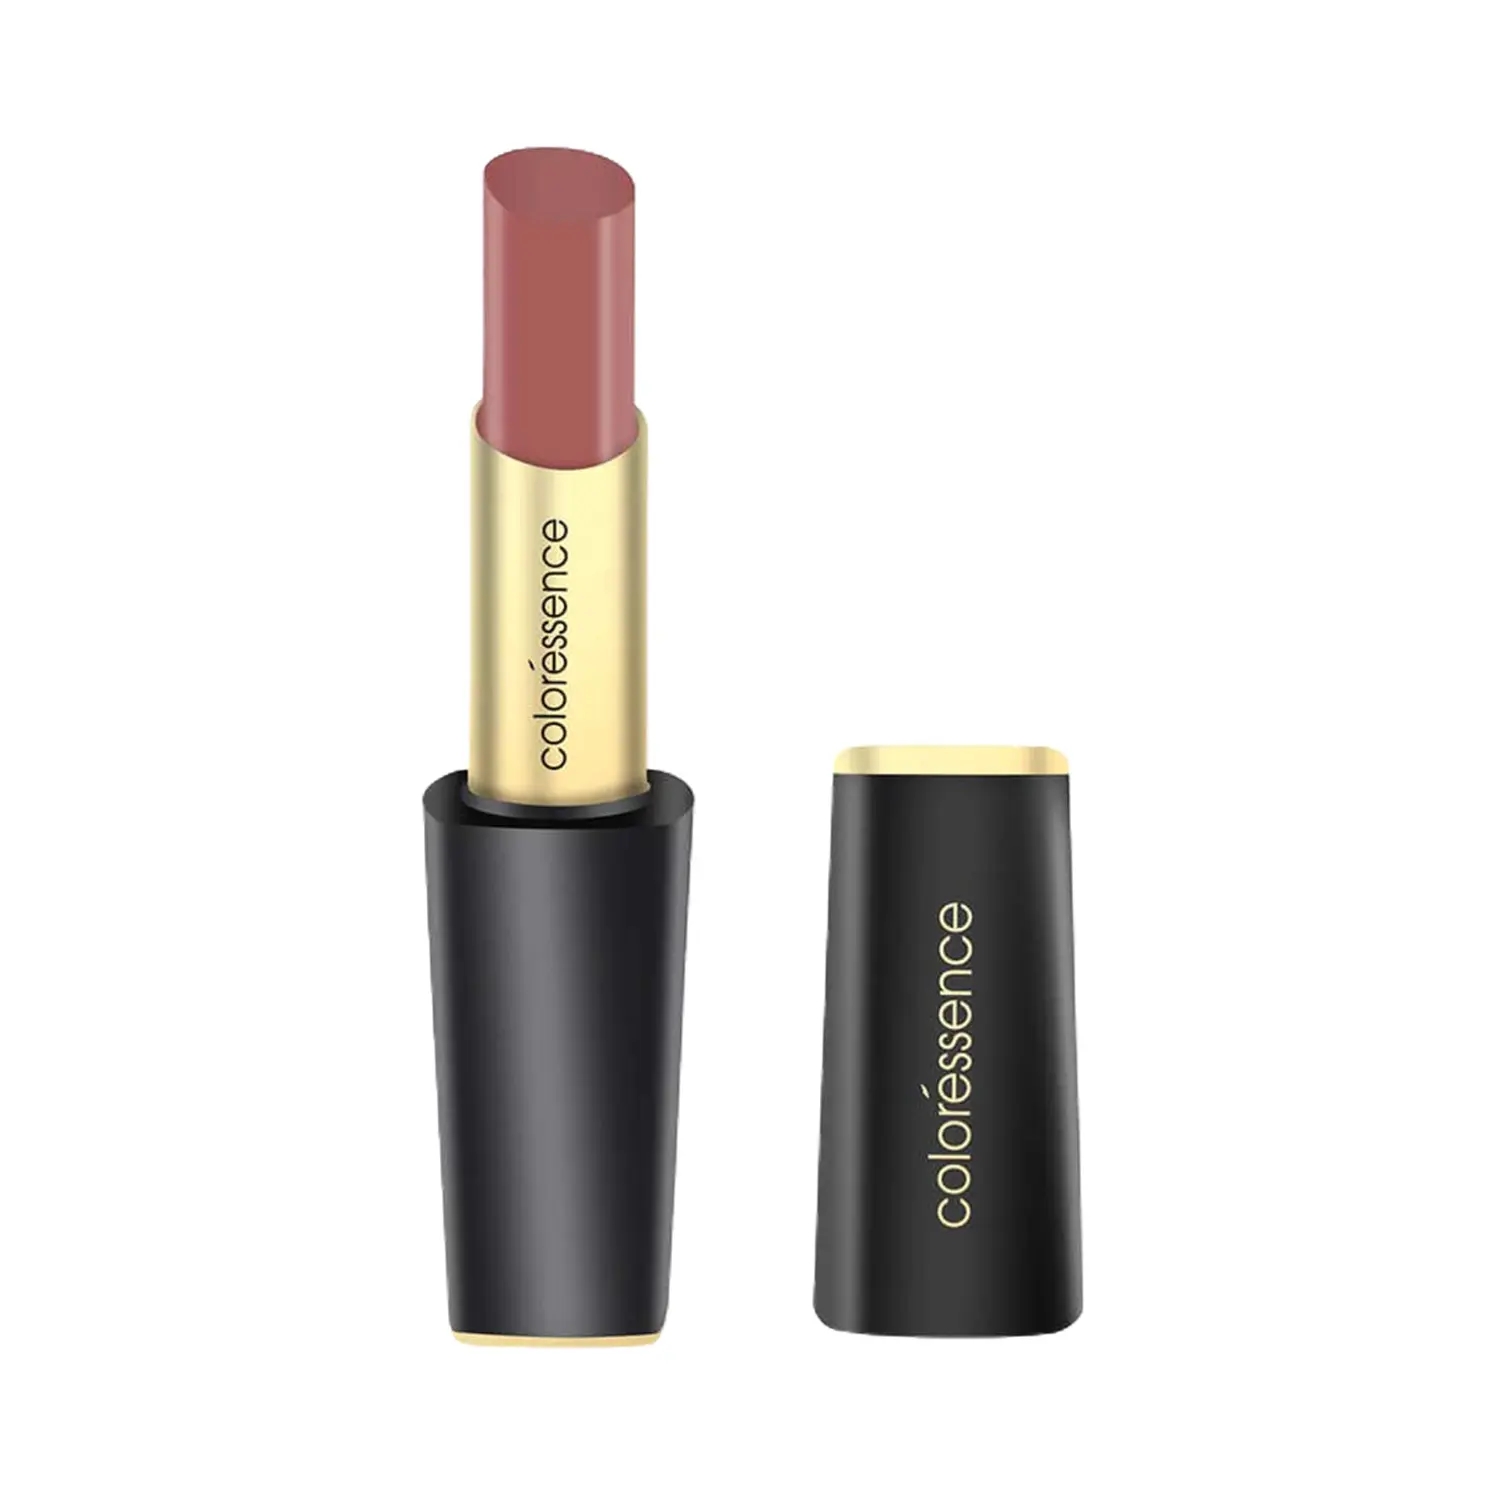 Coloressence | Coloressence Intense Long Wear Lip Color Glossy Lipstick - Muse (2.5g)